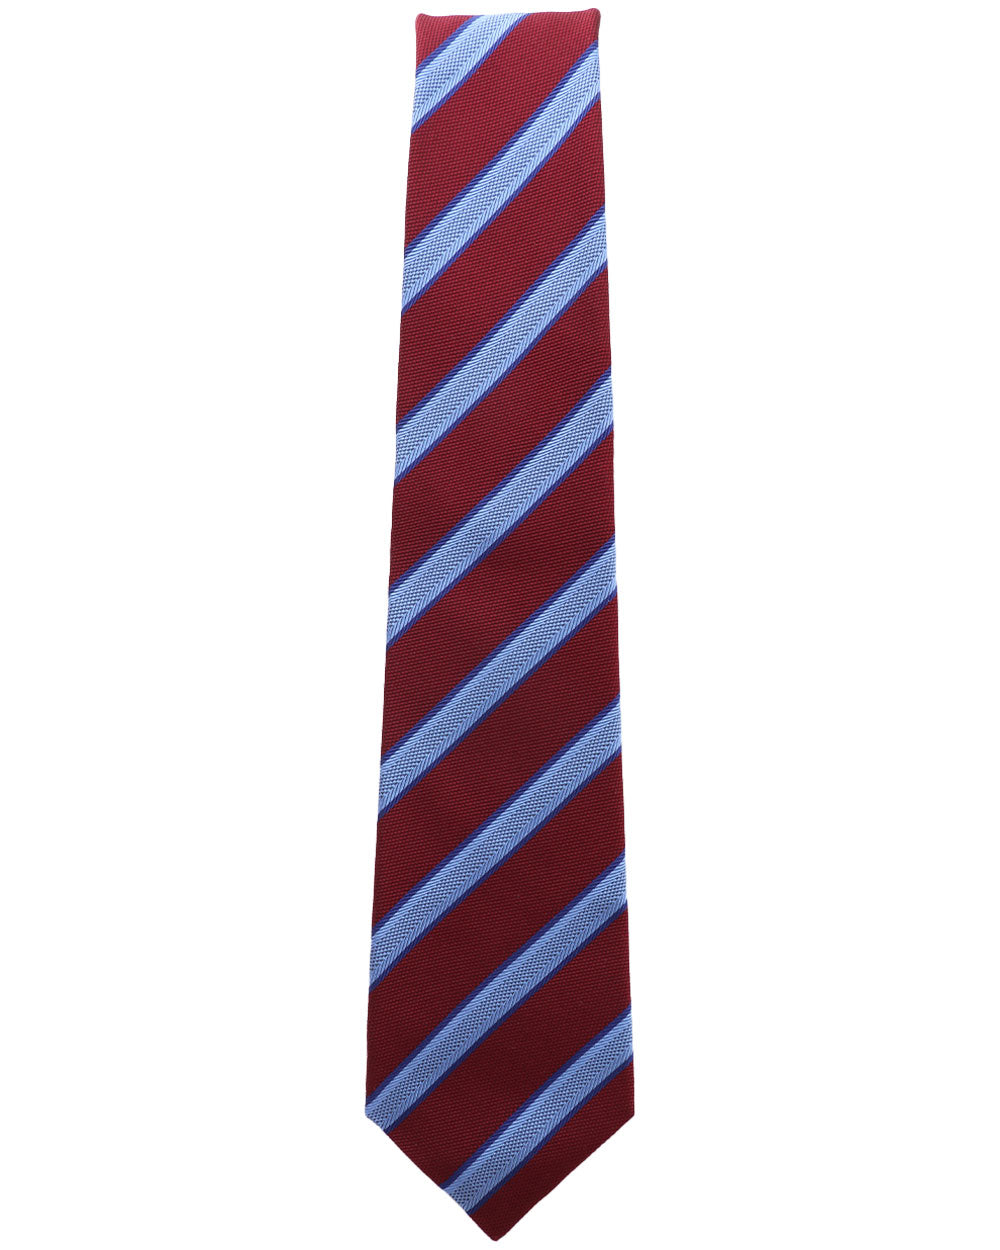 Burgundy and Blue Striped Silk Tie